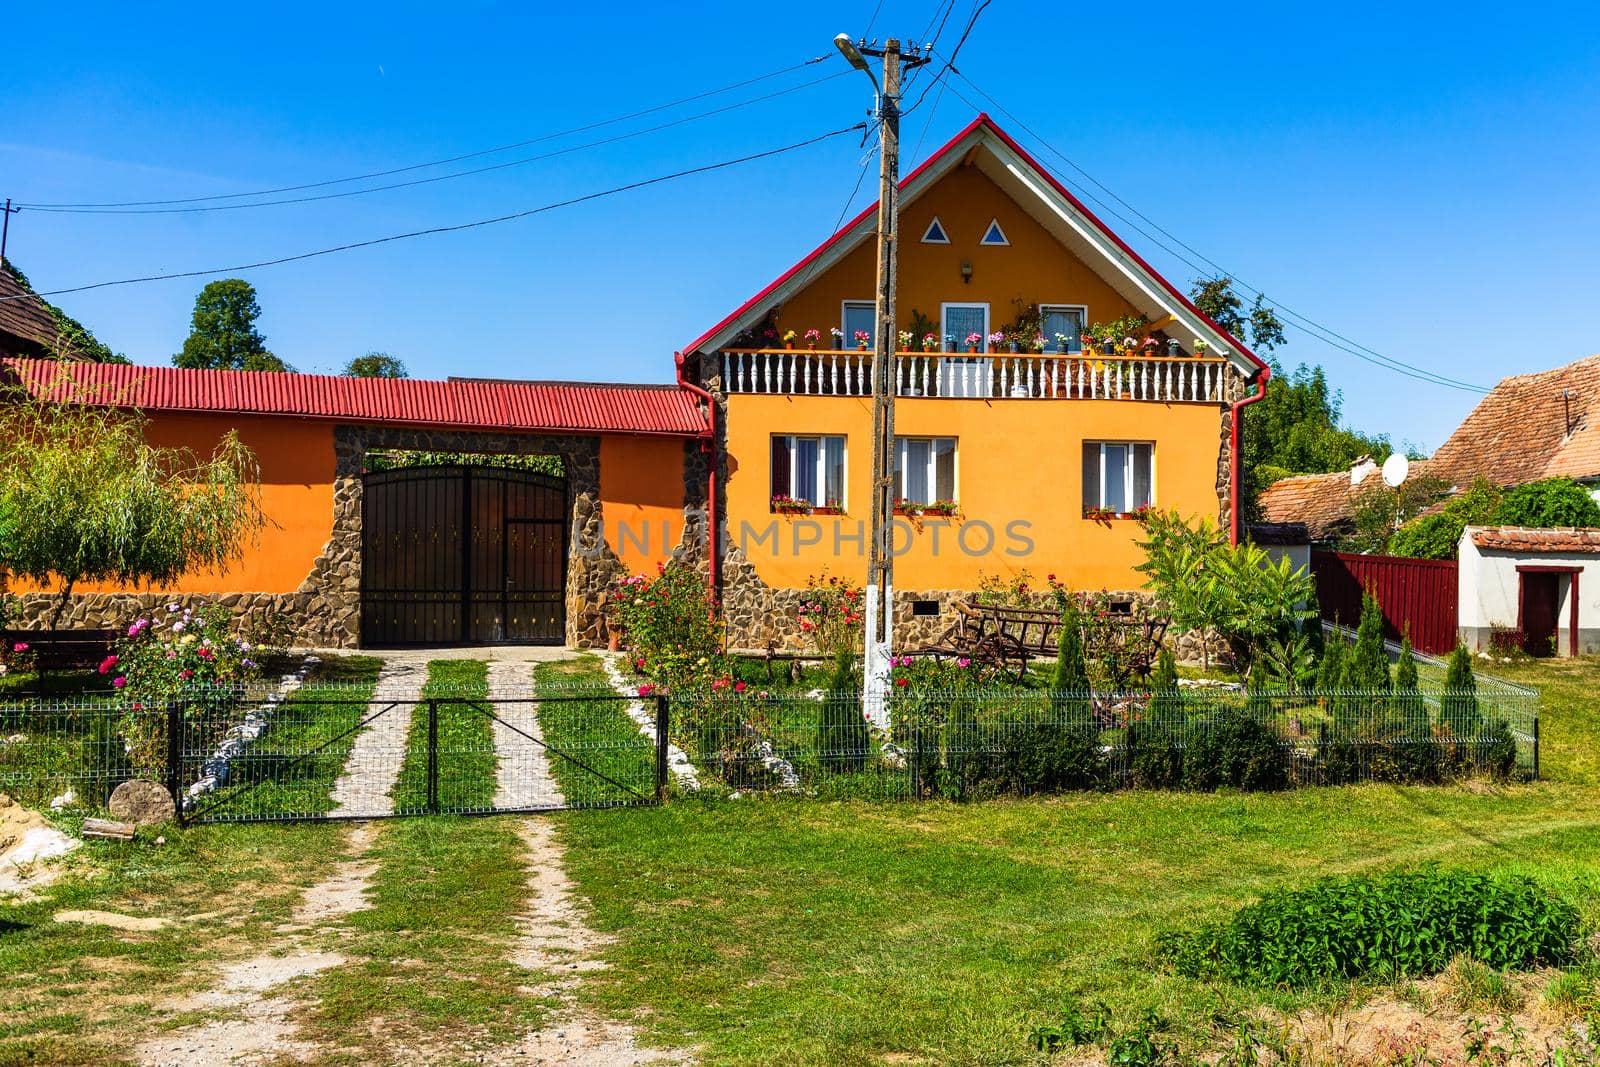 Typical rural landscape and rustic houses in Barcut -Bekokten, Transylvania, Romania, 2021.